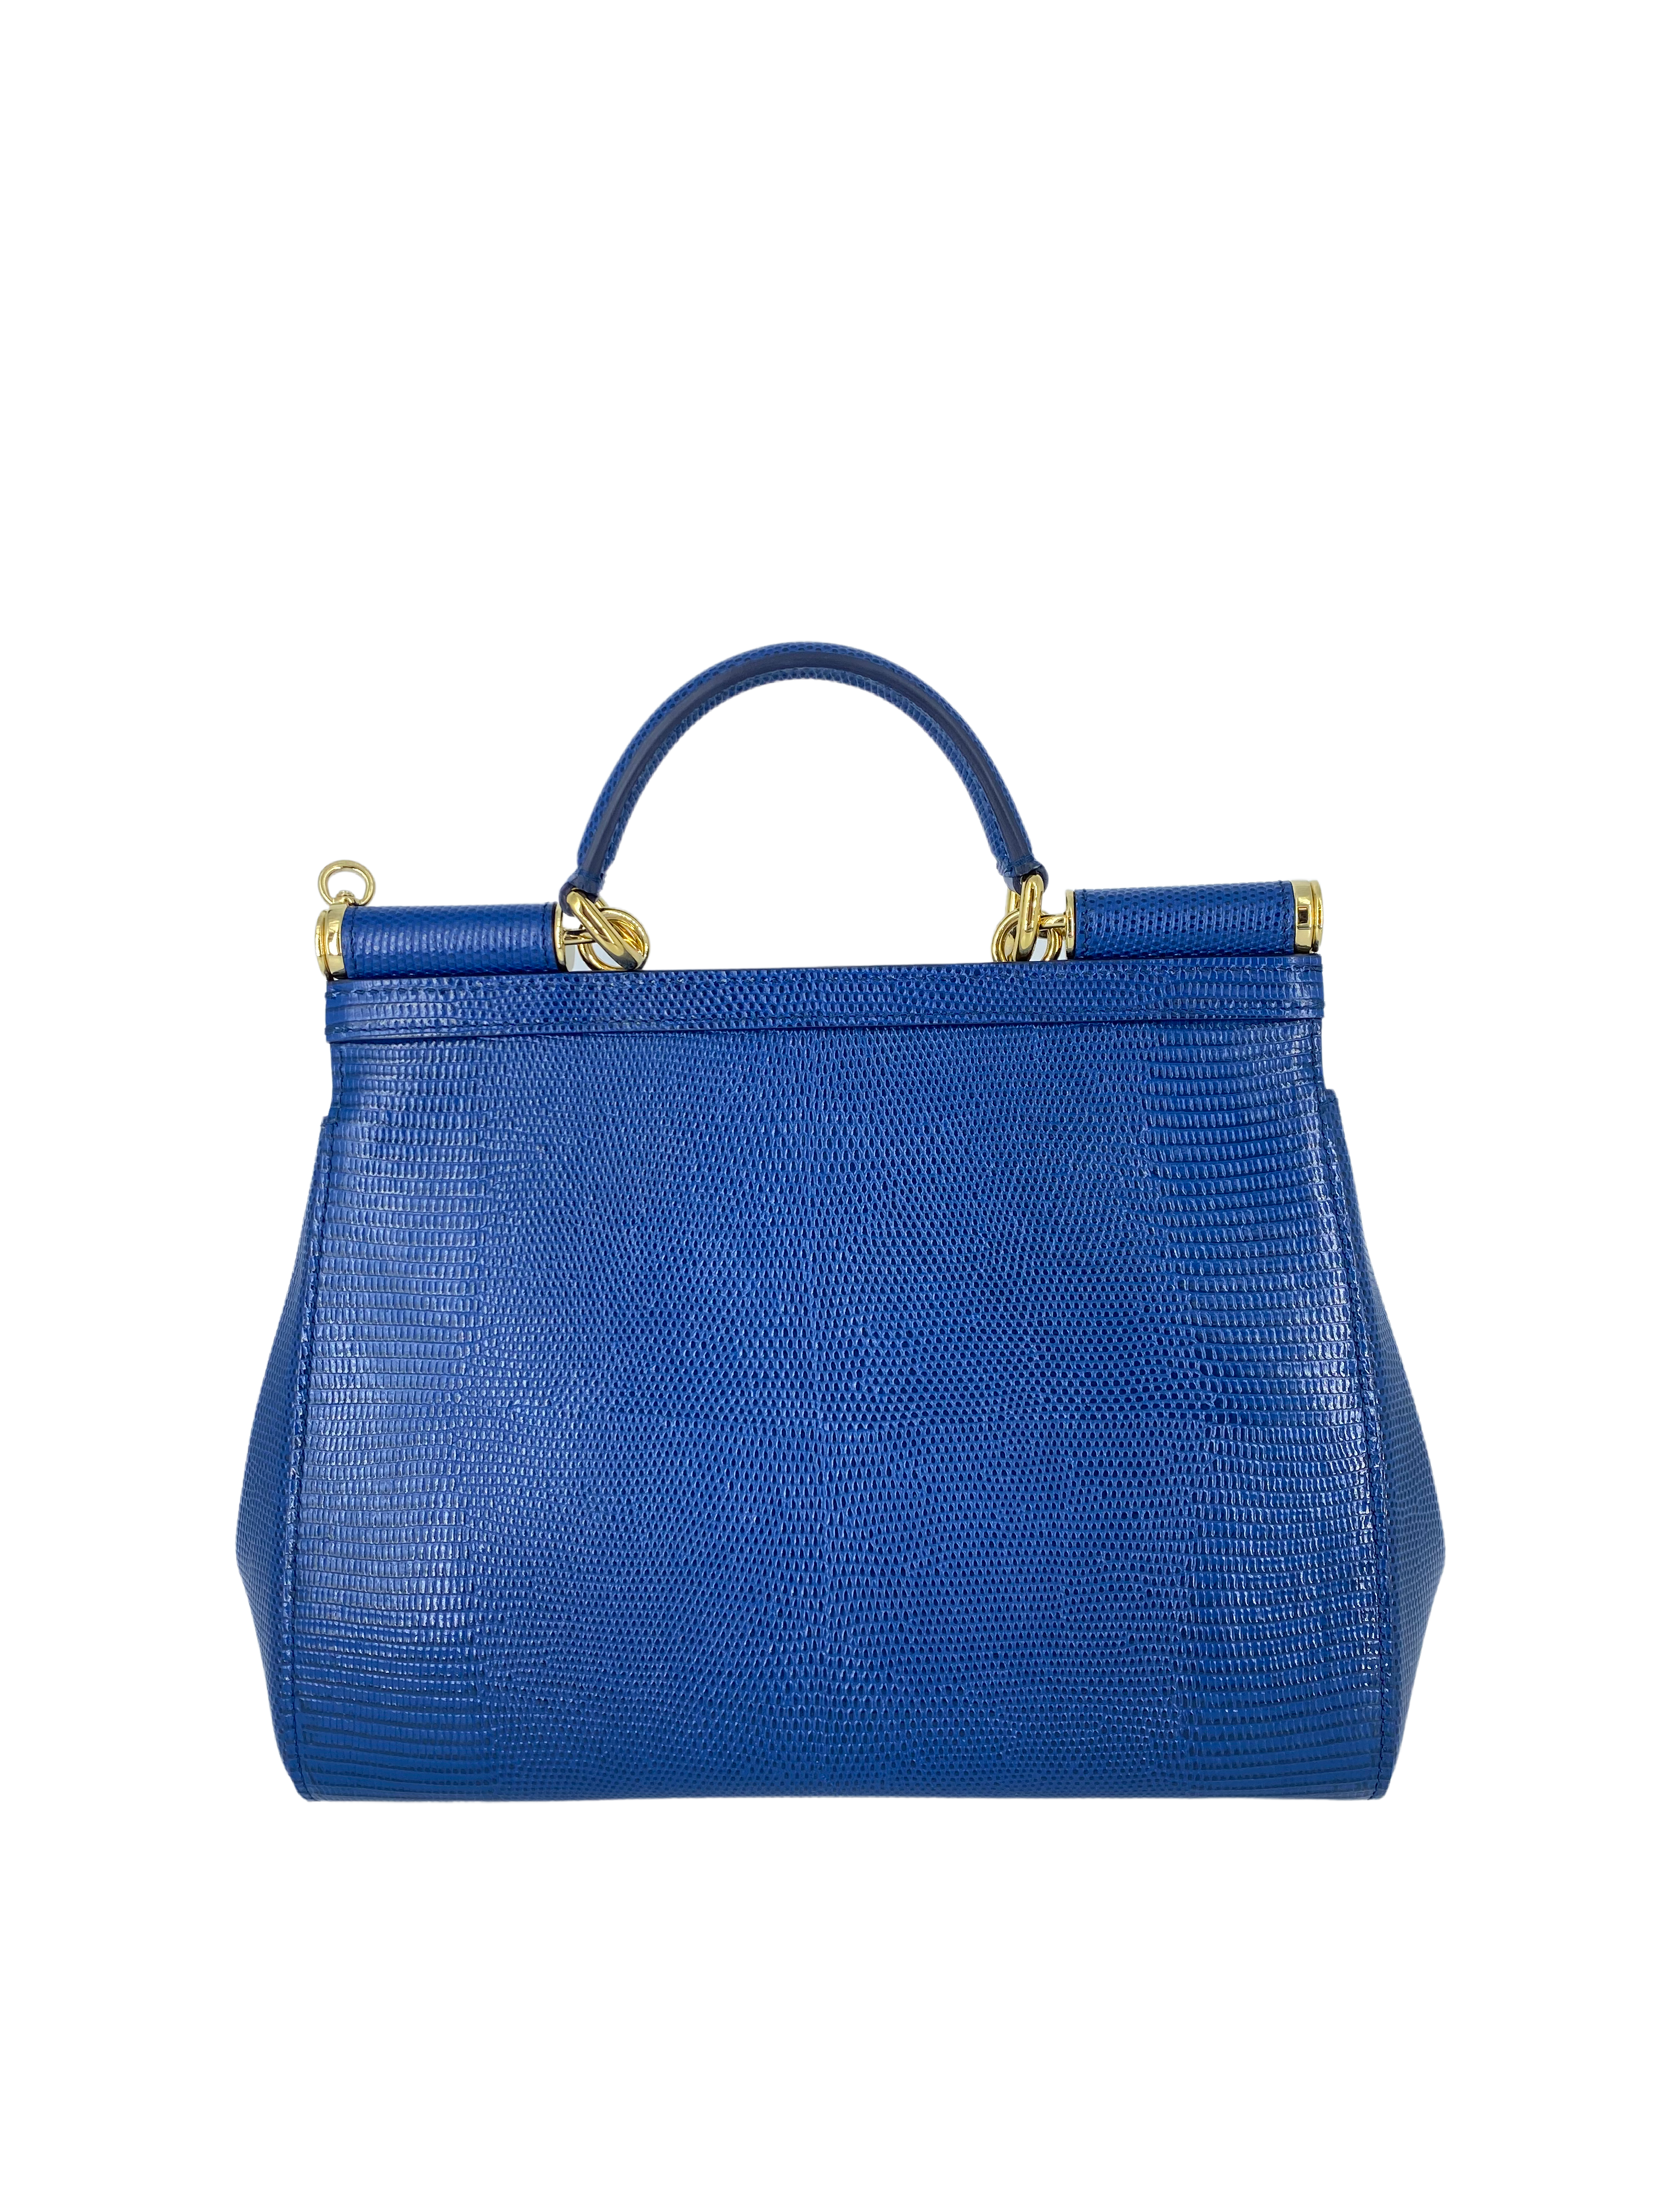 kate spade | Bags | Perfect Condition Royal Blue Kate Spade Mini Purse |  Poshmark